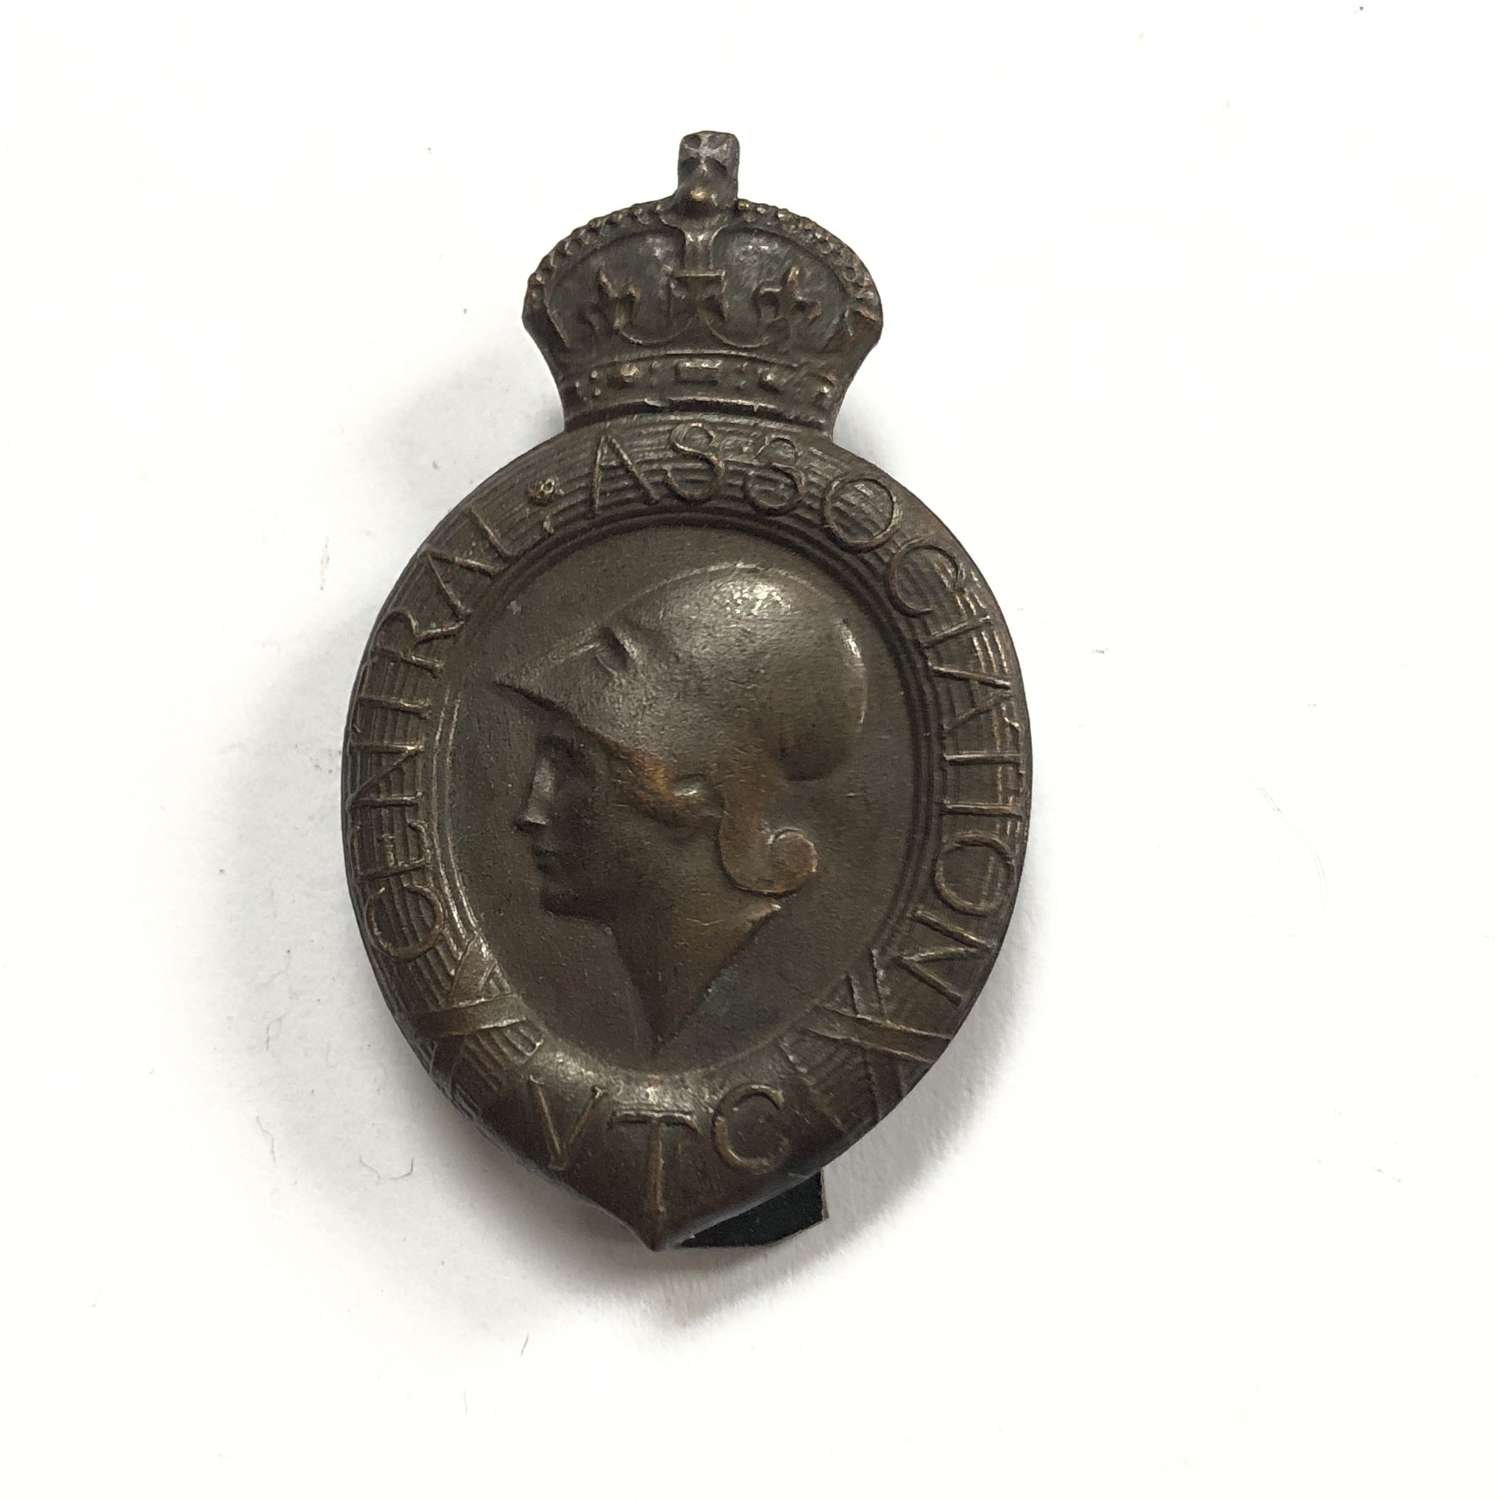 VTC Central Association WW1 cap badge by Fattorini & Sons, Bradford